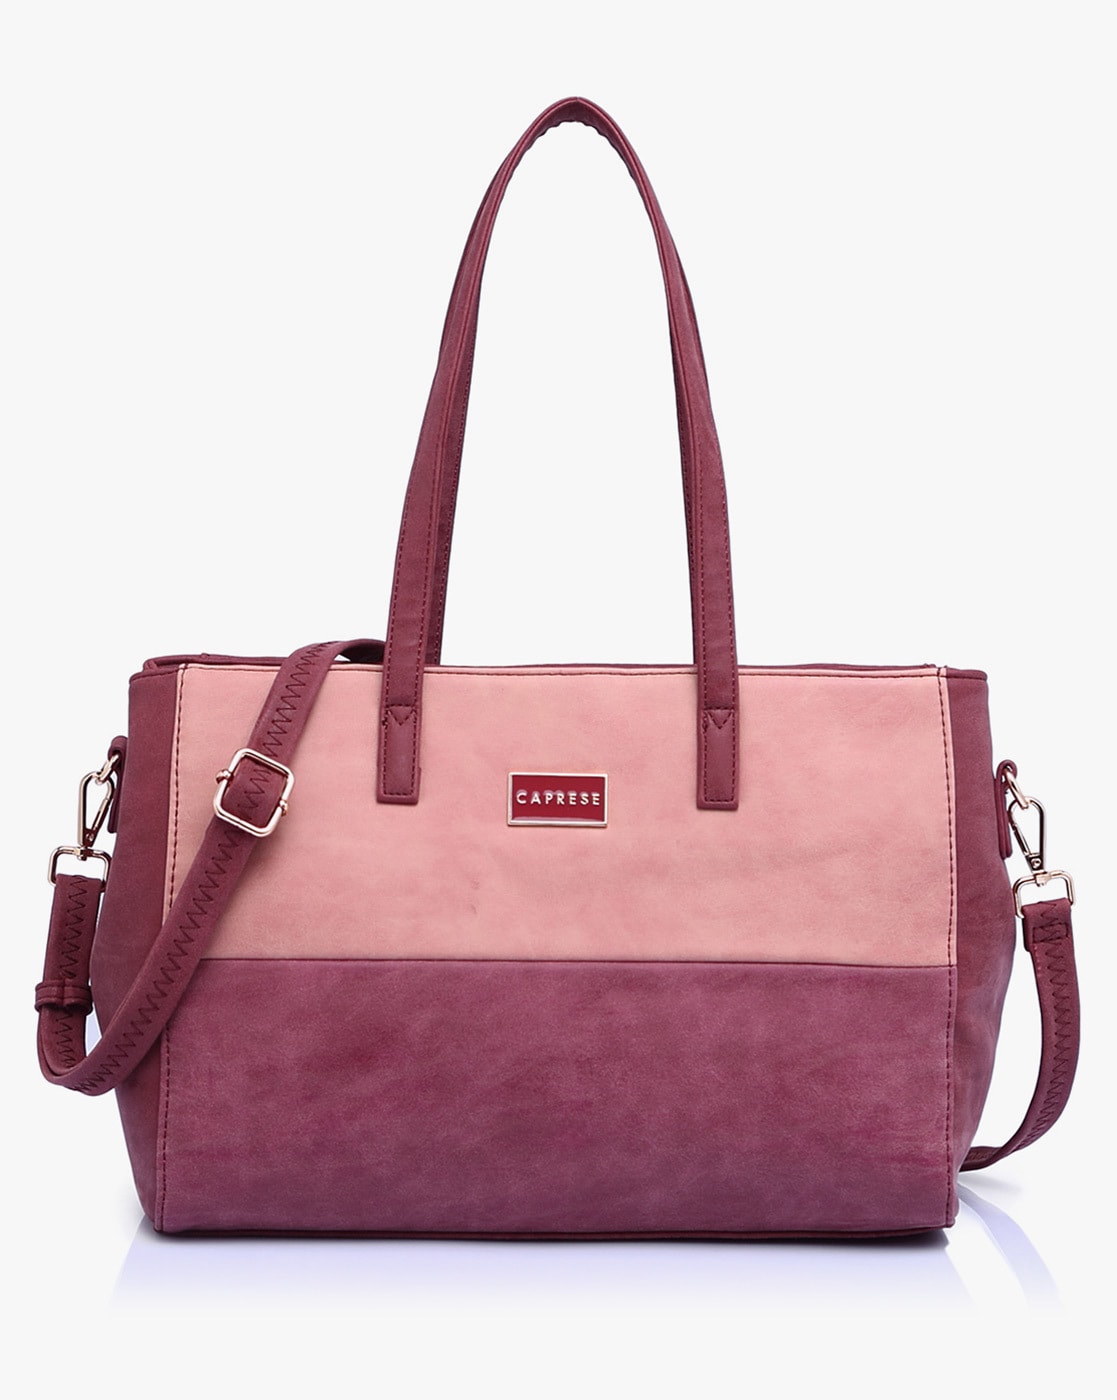 Buy Caprese Small Blush Pink Casual Satchel Handbag Online